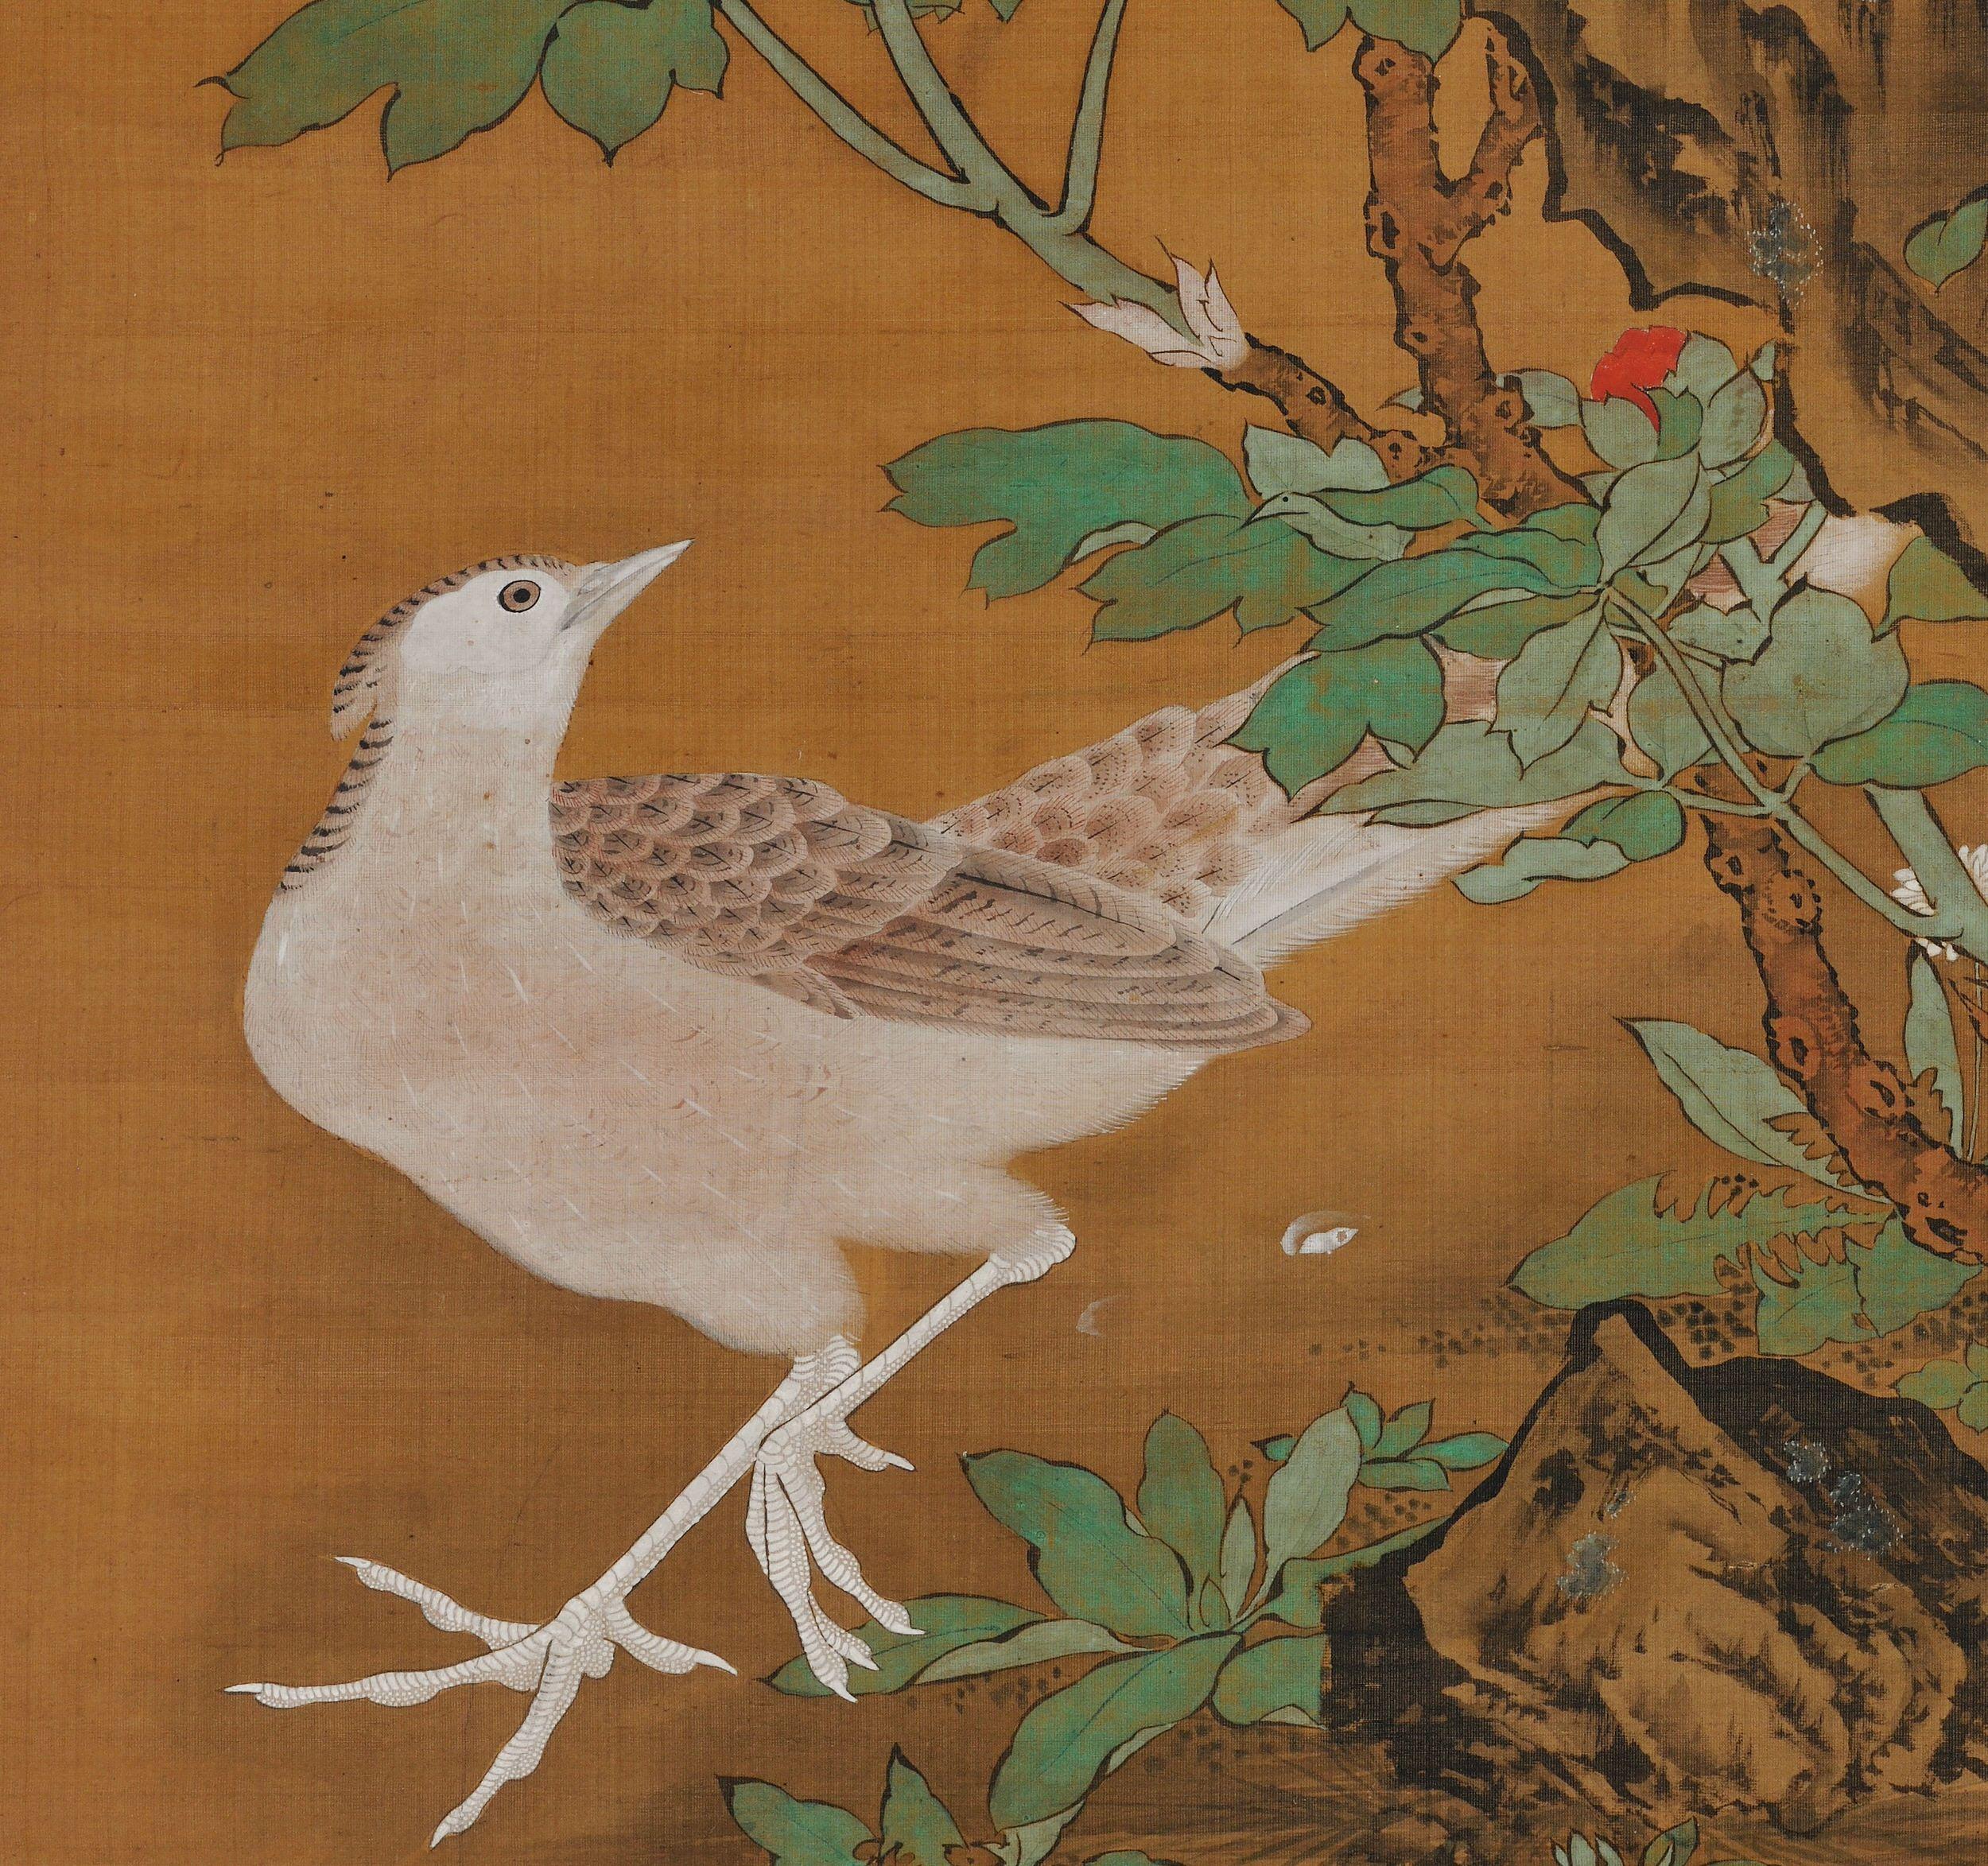 Edo Japanese Flower and Bird Scroll Painting by Kano Tanshin Morimichi, circa 1815